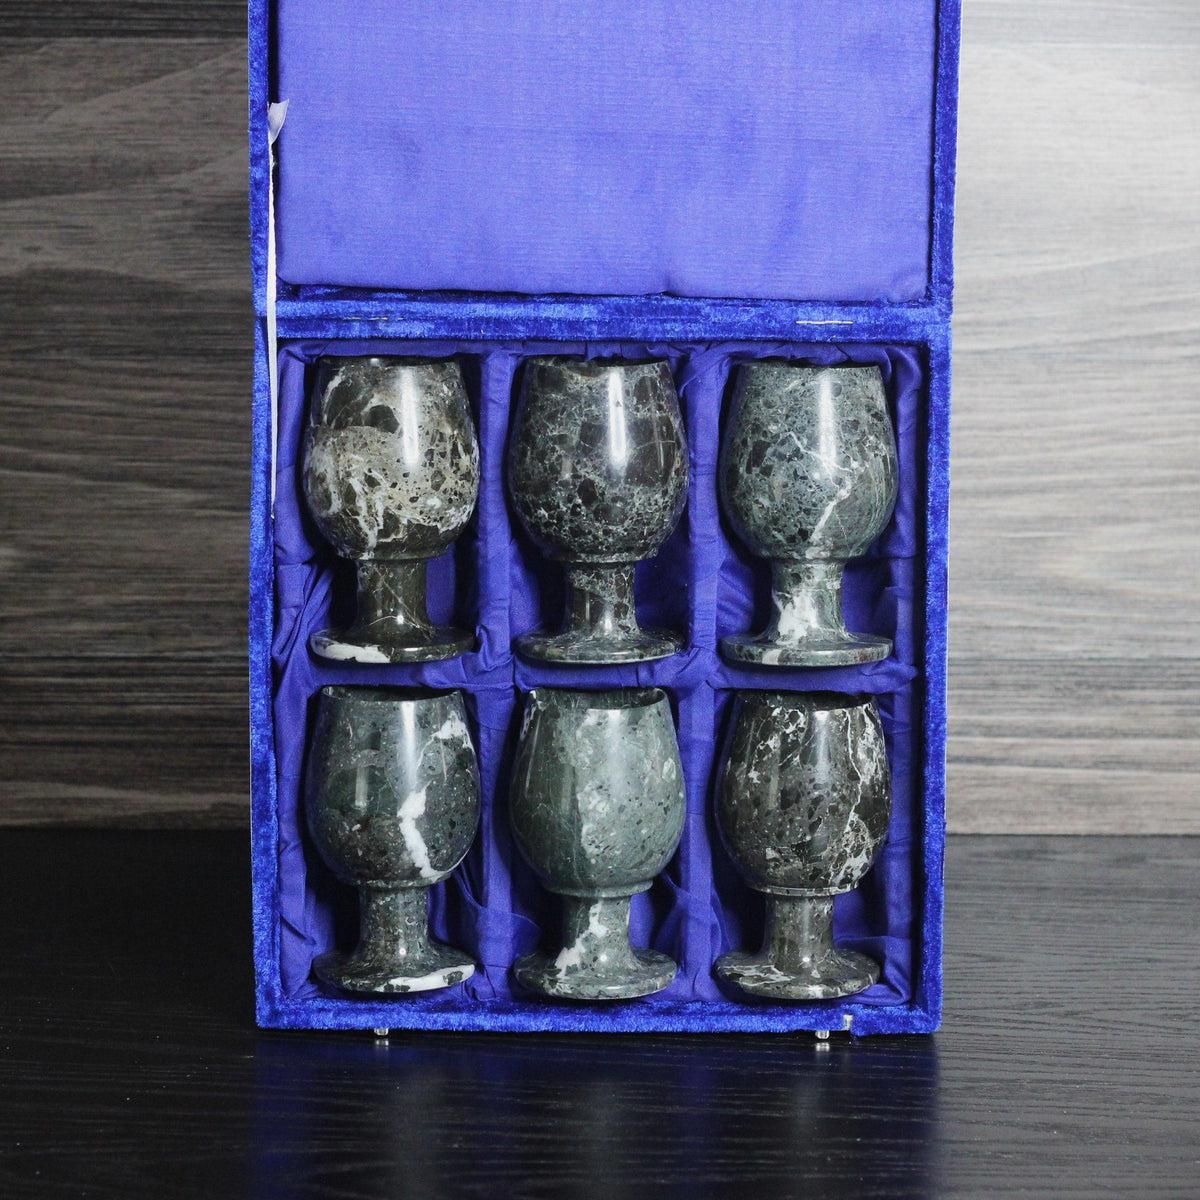 10 oz. Black Onyx Wine Glasses Gift Set - Marble Cultures